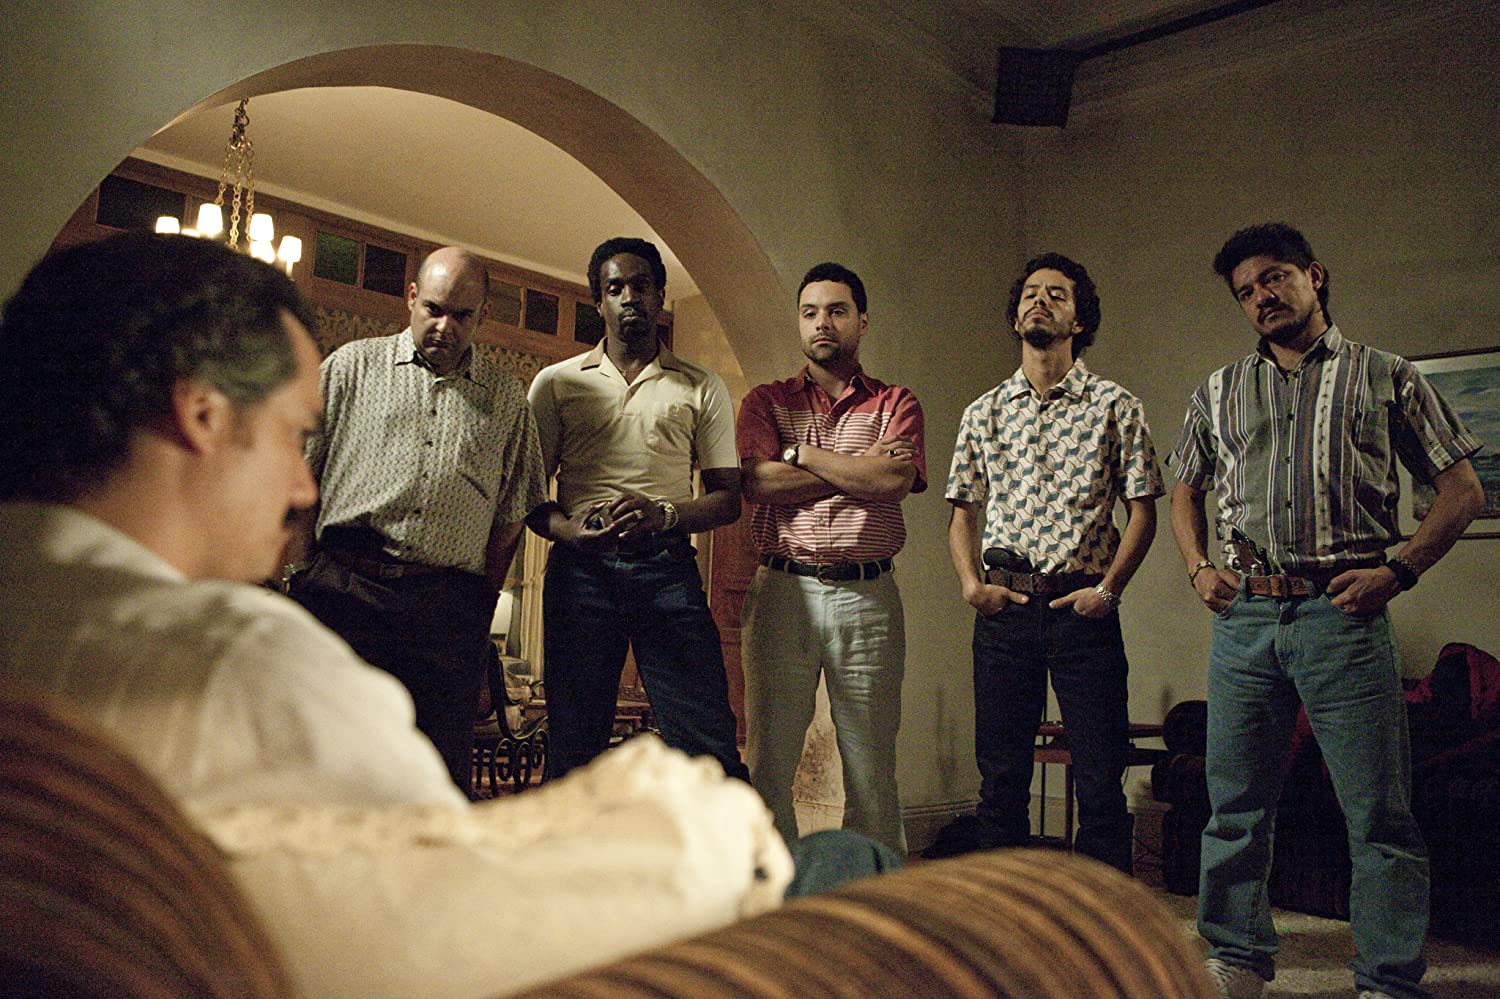 Wagner Moura, Julián Díaz, Diego Cataño, Andrés Felipe Torres, Federico Rivera y Leynar Gómez en Narcos (2015)